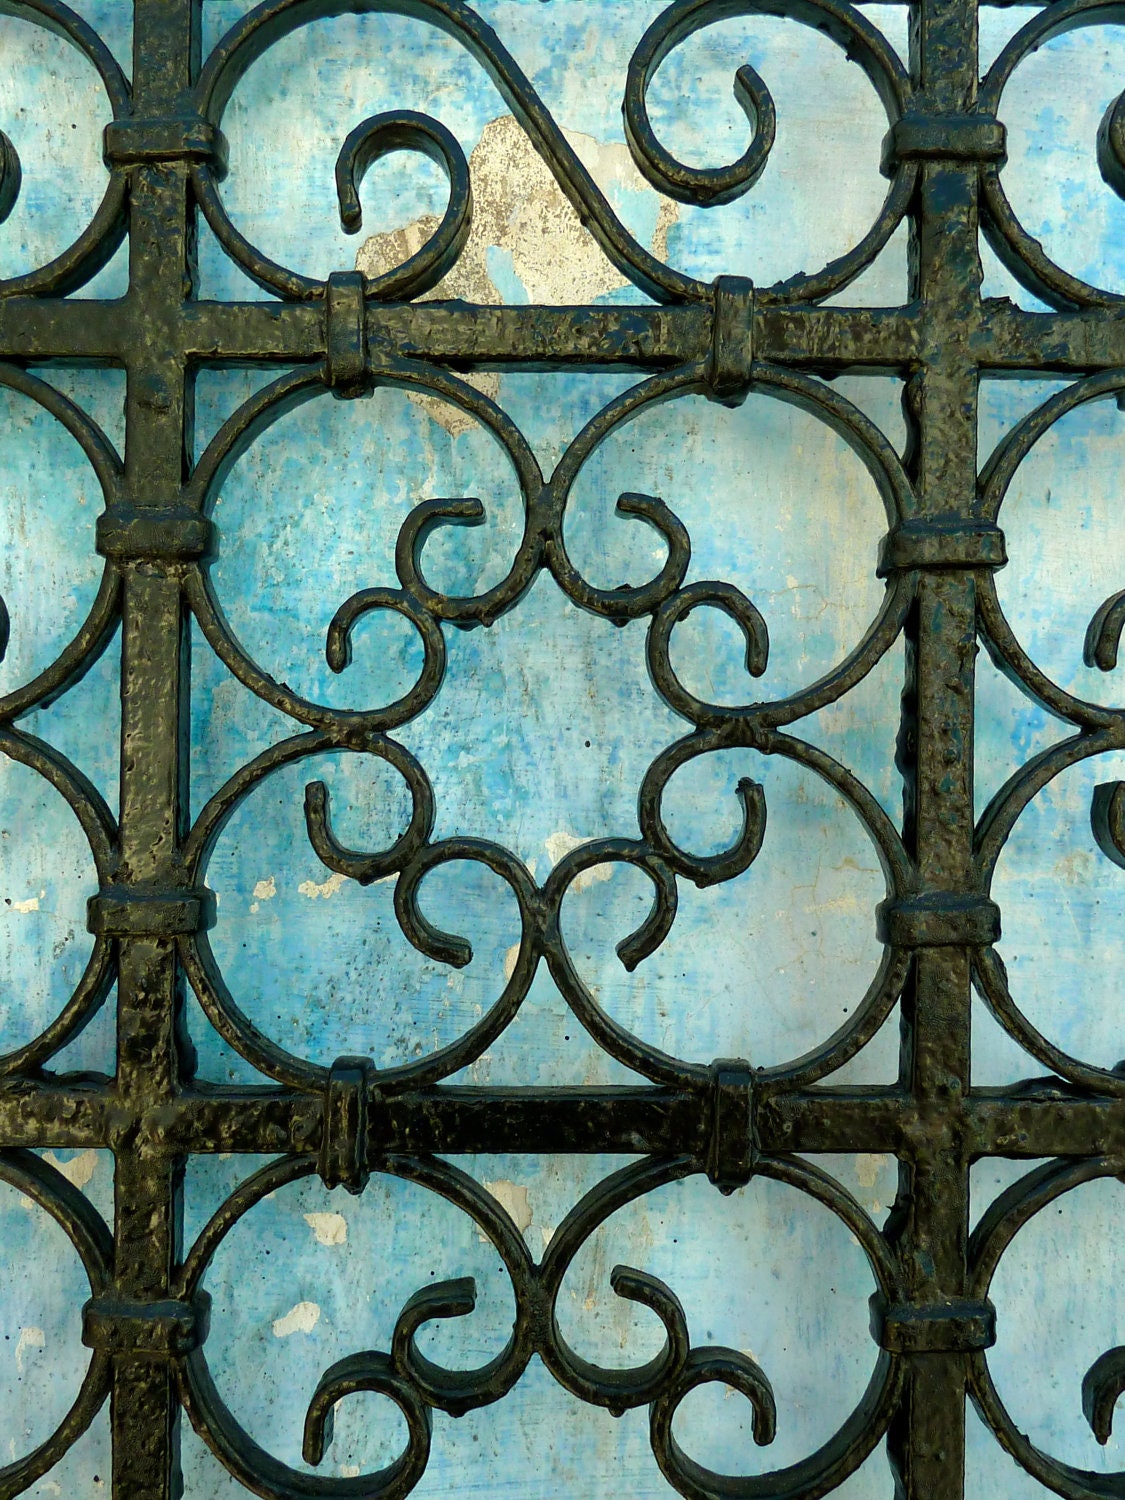 MOROCCAN wrought  - iron gate - blue faded wall - moroccan art - photo print - 5 x 7 " - HEARTtoHEARTart